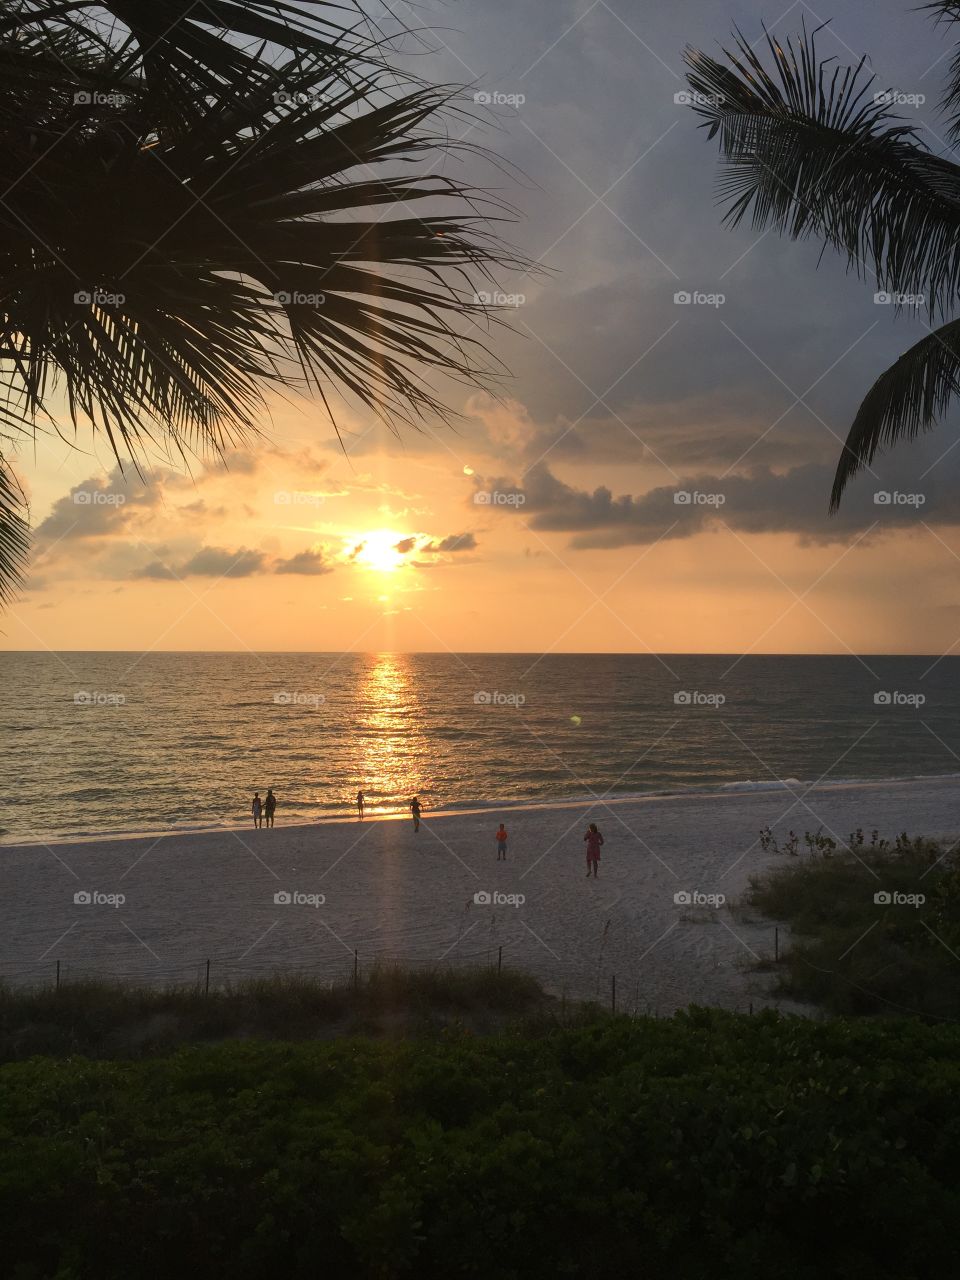 Naples Florida sunset 